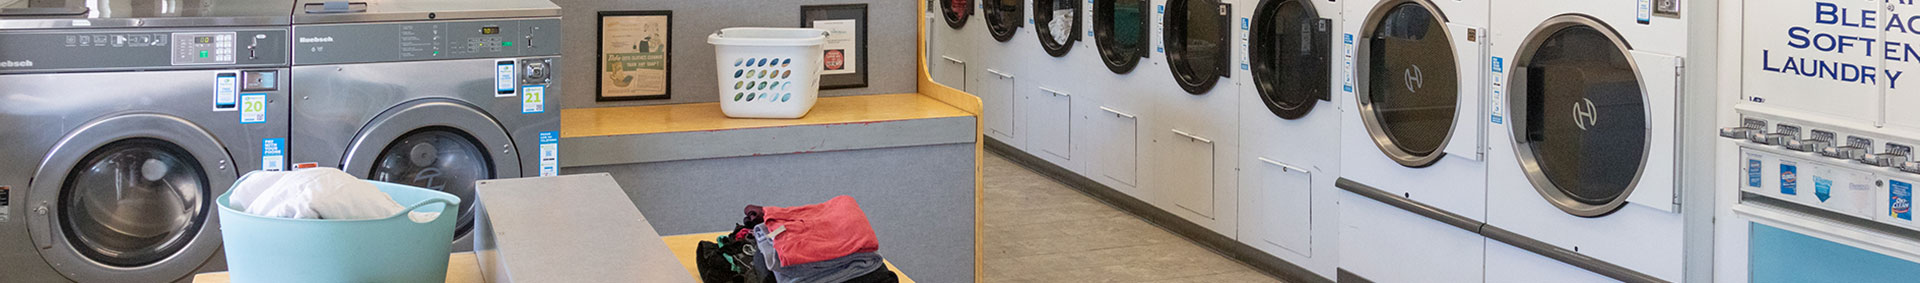 Laundromat Atascadero - Laundromat Paso Robles - Laundry Services - Swish and Swirl Laundromat